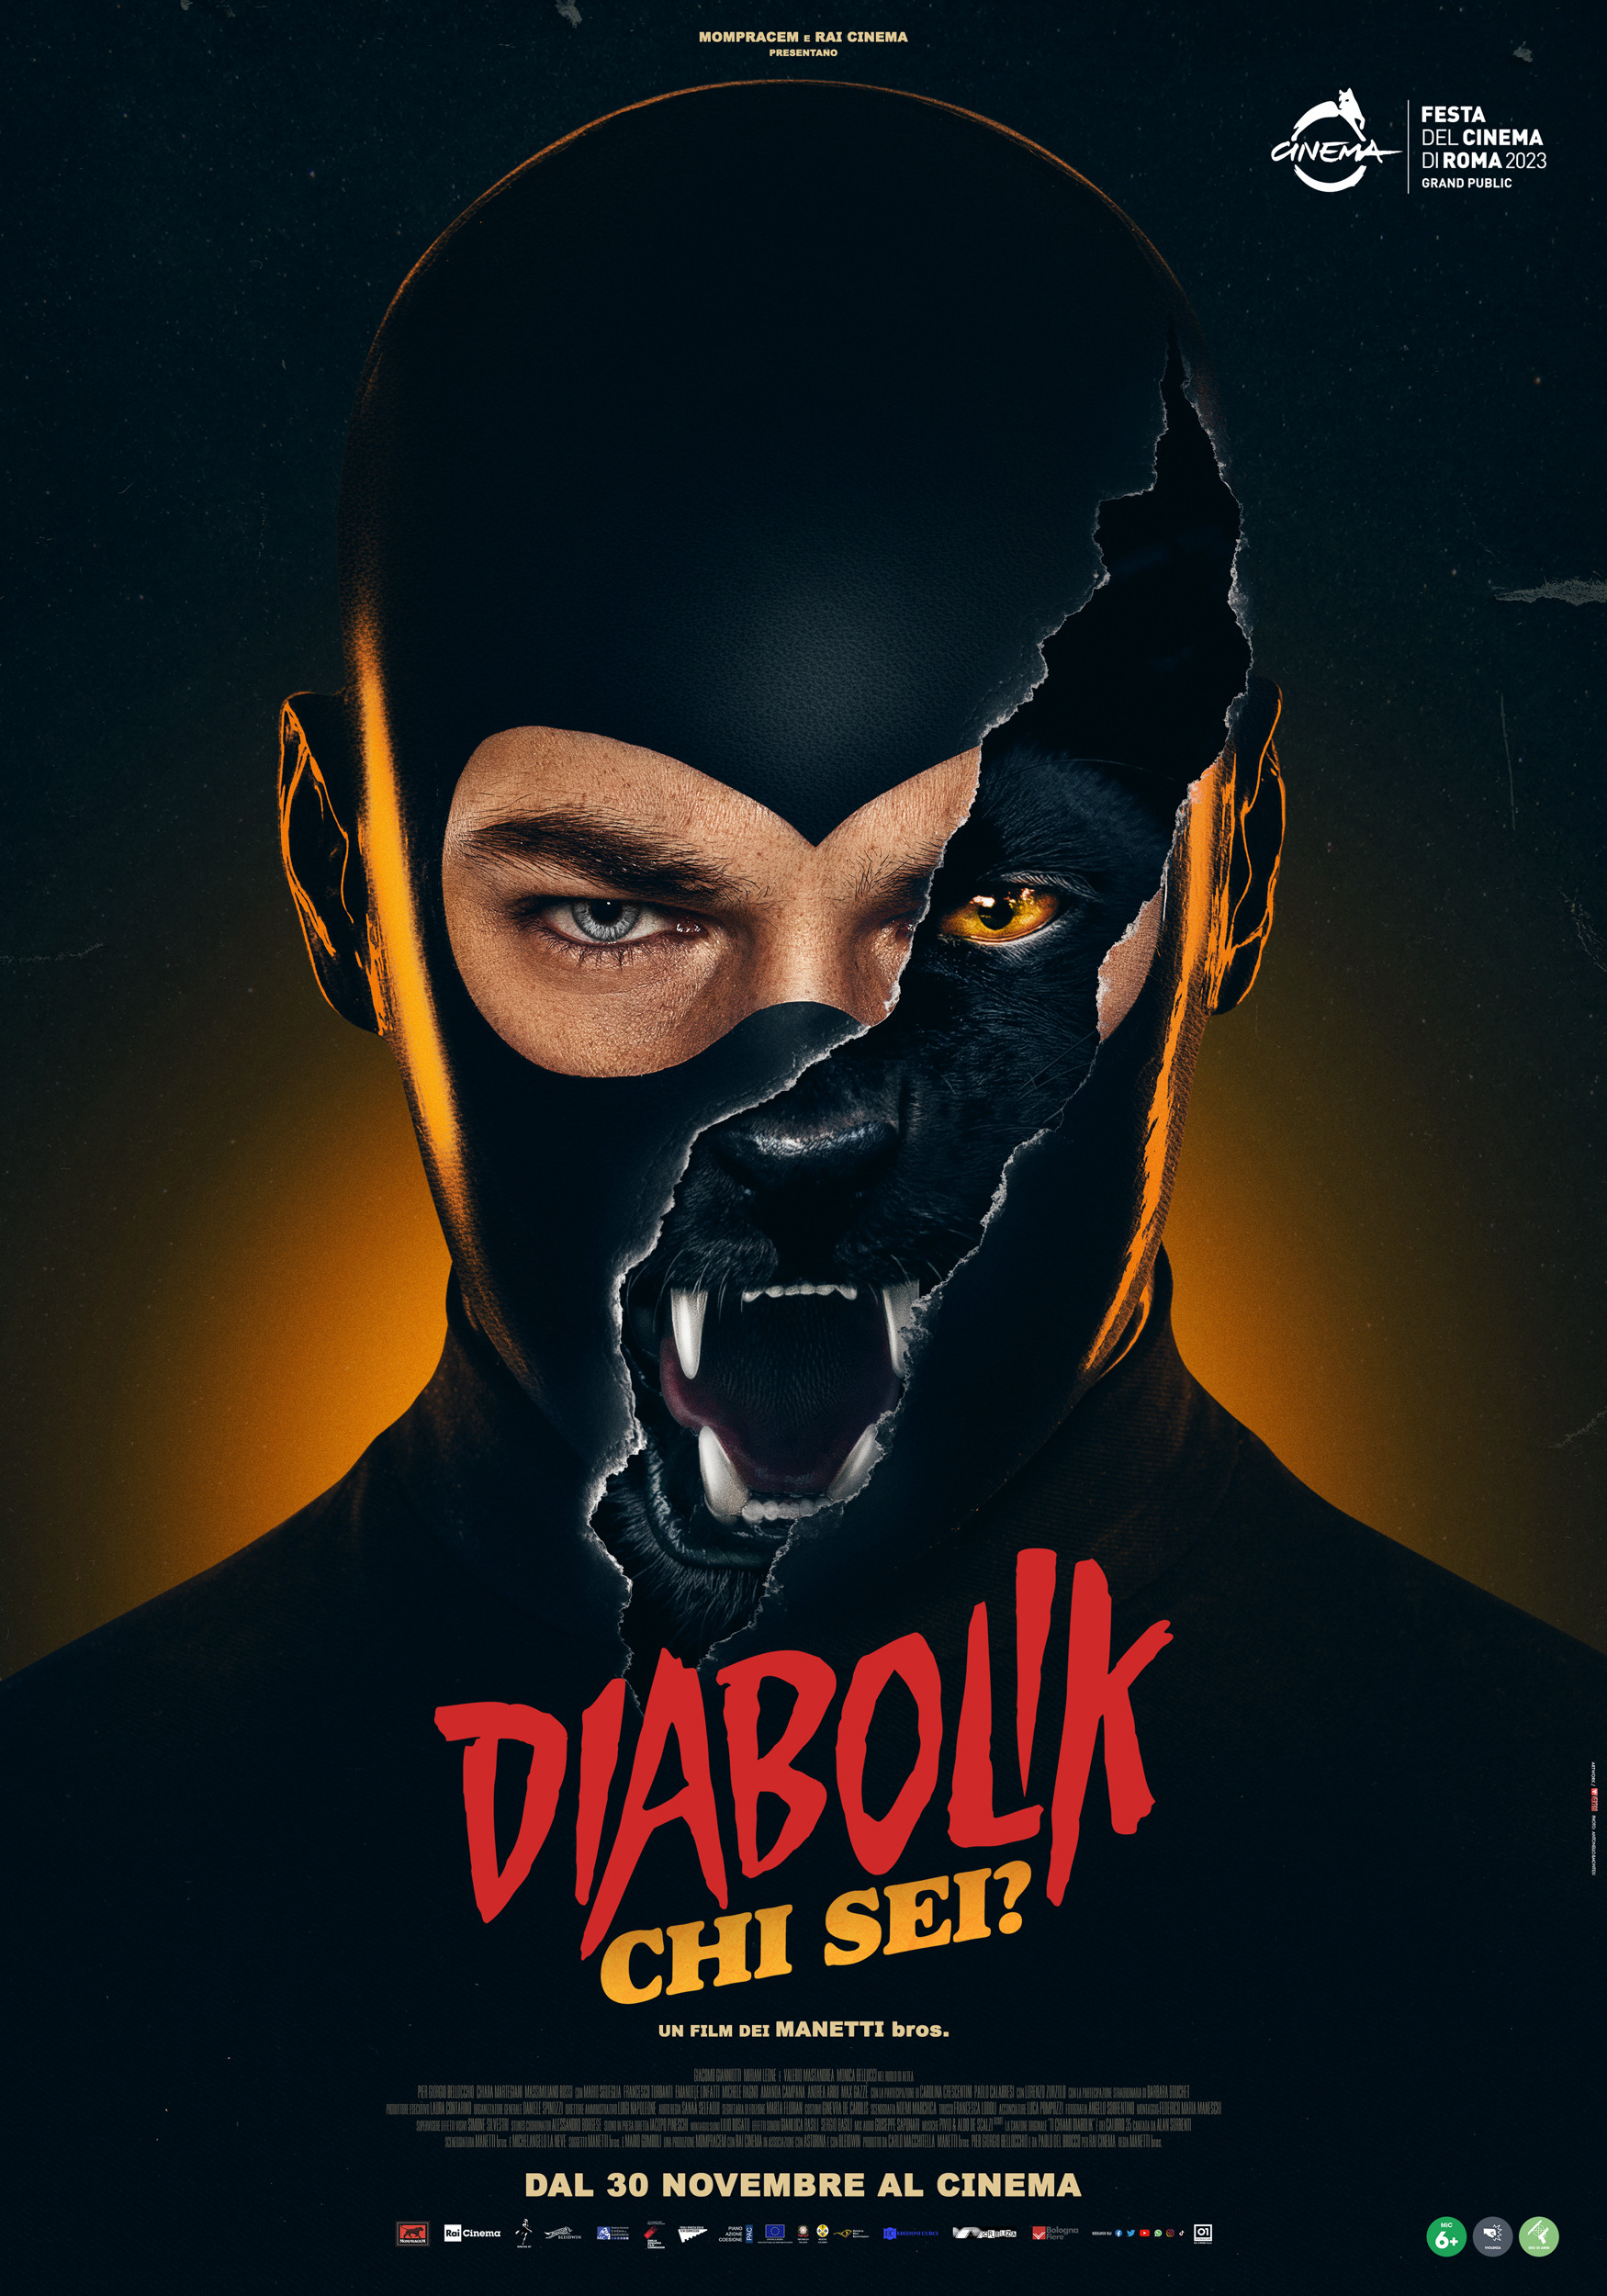 Mega Sized Movie Poster Image for Diabolik chi sei? (#3 of 6)